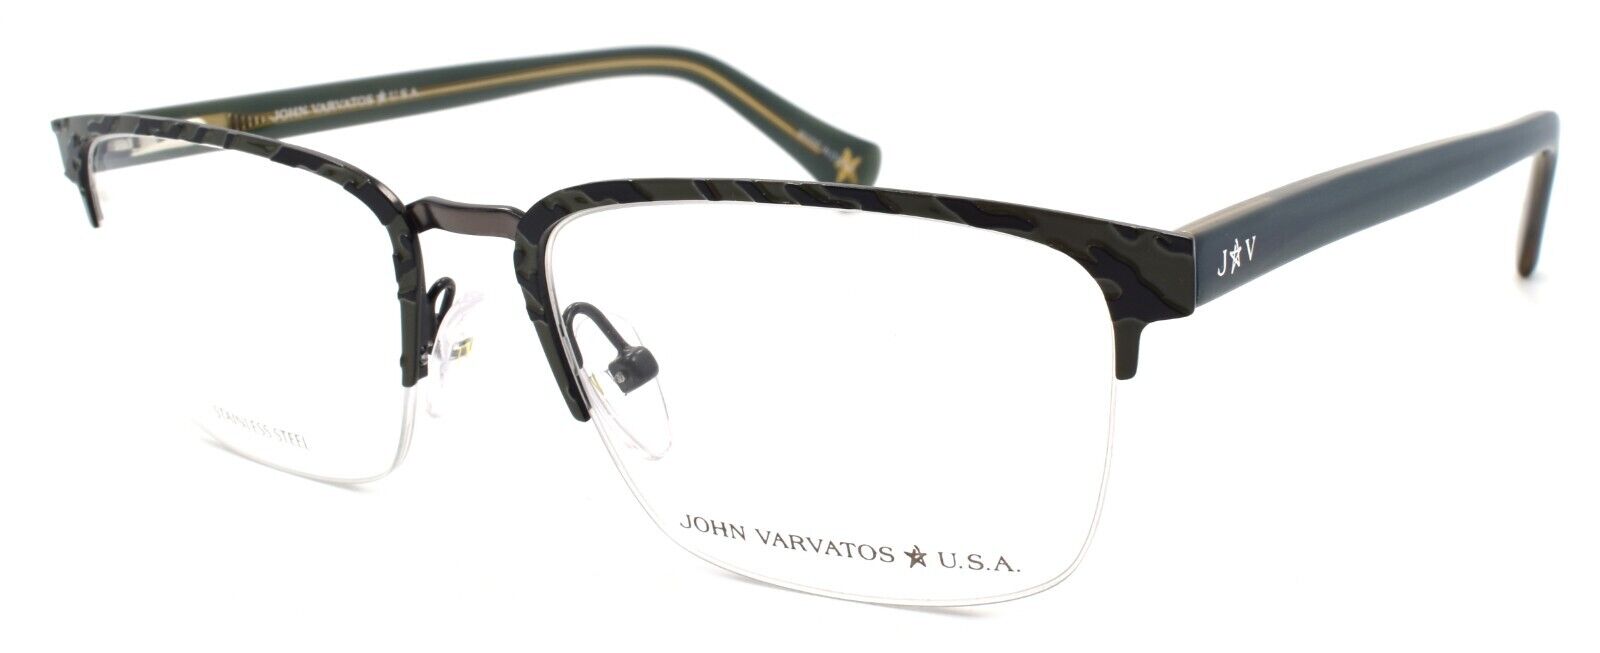 1-John Varvatos VJVC007 Men's Eyeglasses Frames Half-rim 53-18-145 Sage / Black-751286369830-IKSpecs